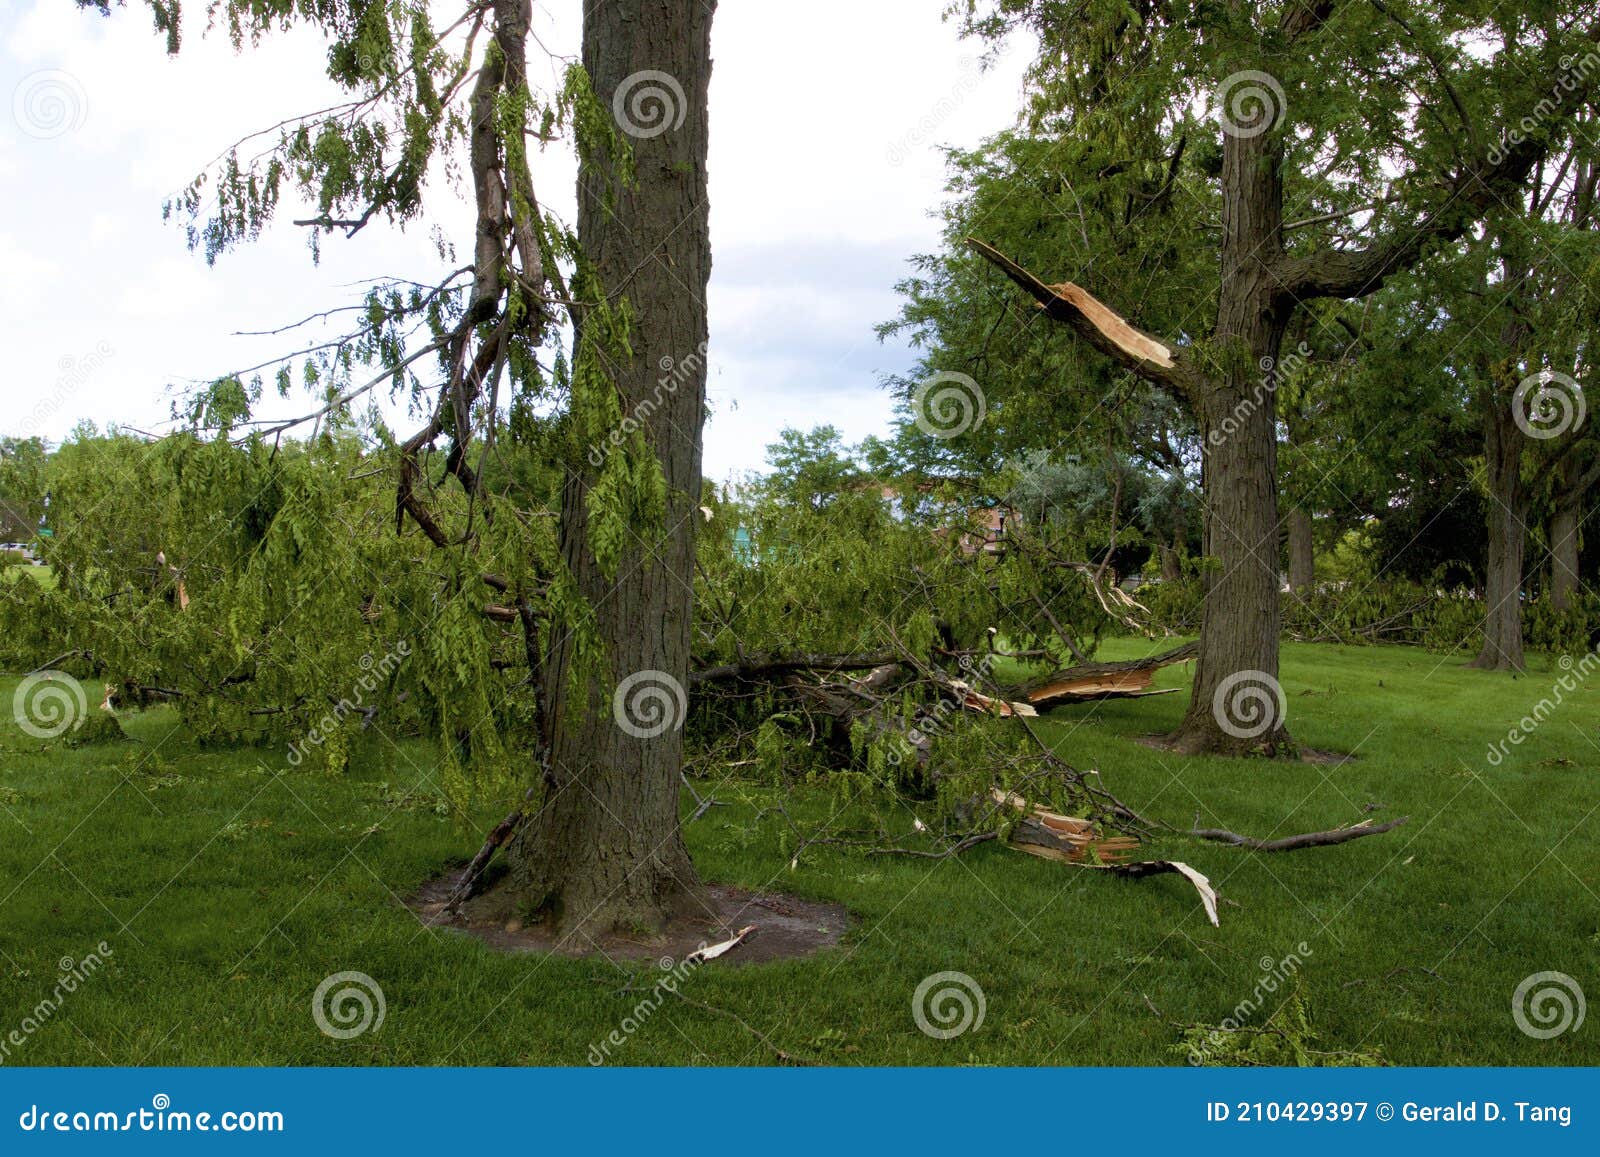 trees hit by derecho in elgin   844216